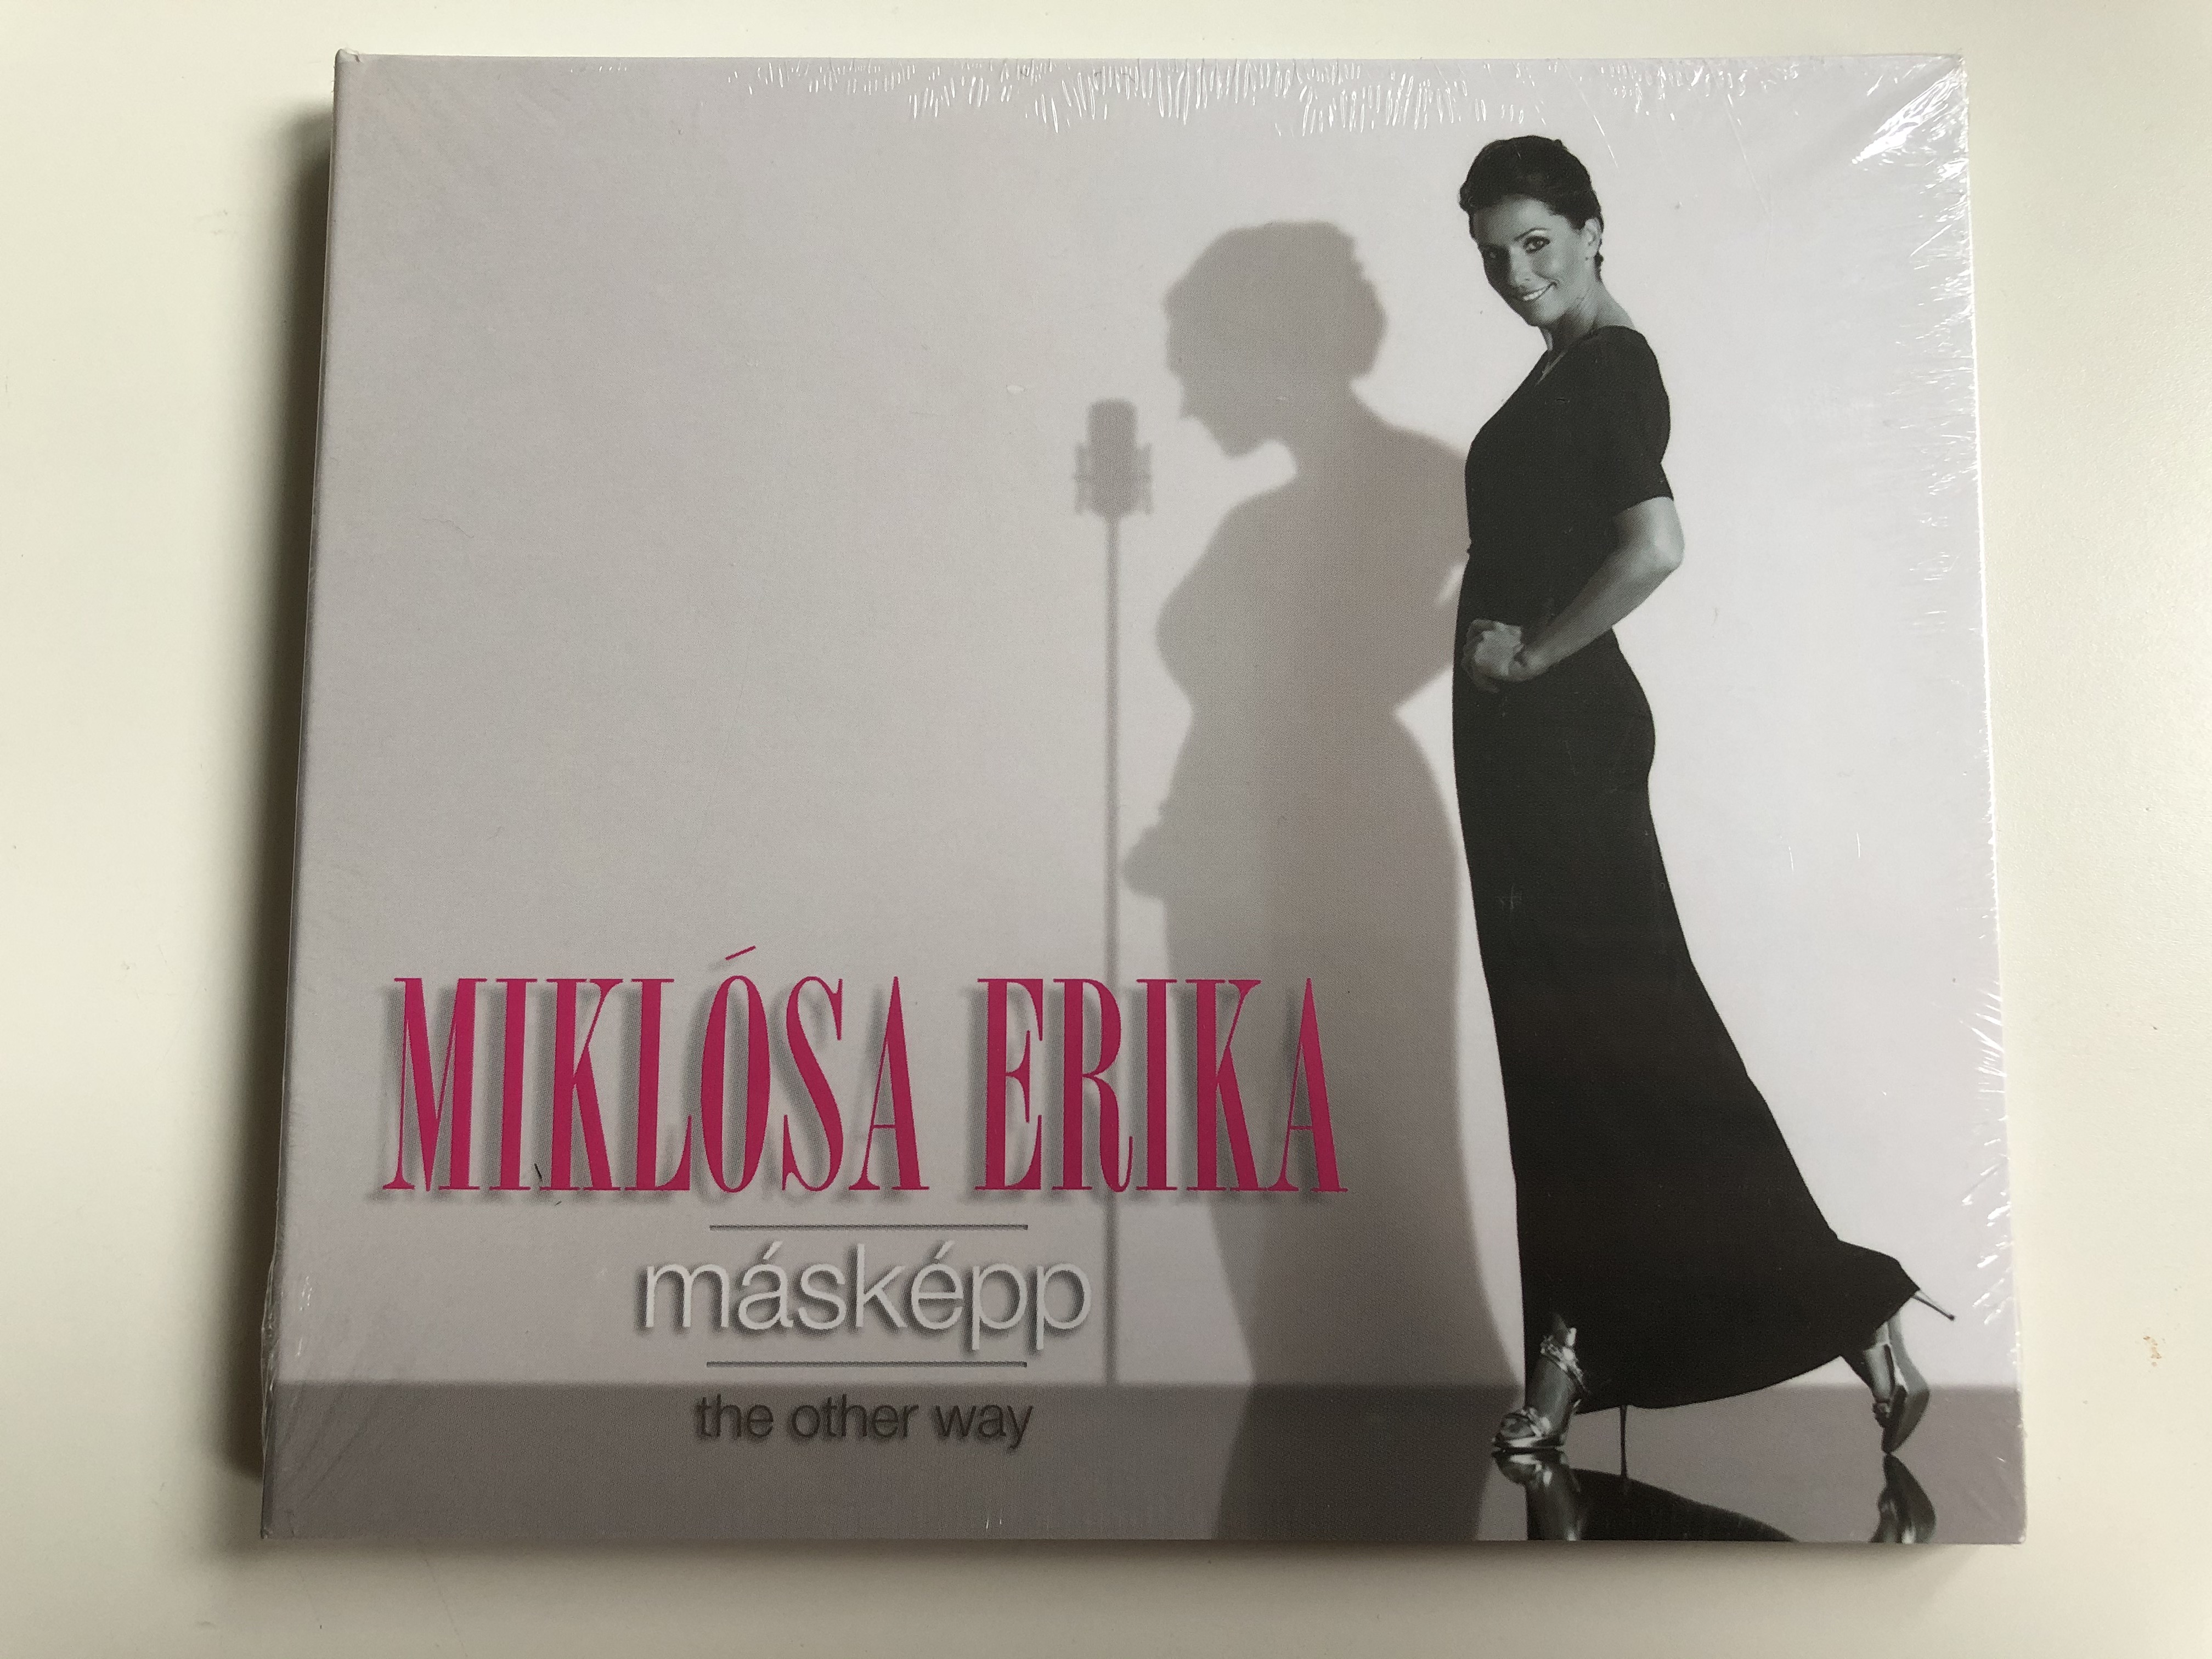 mikl-sa-erika-m-sk-pp-the-other-way-pentaton-audio-cd-2011-pen-010-1-.jpg